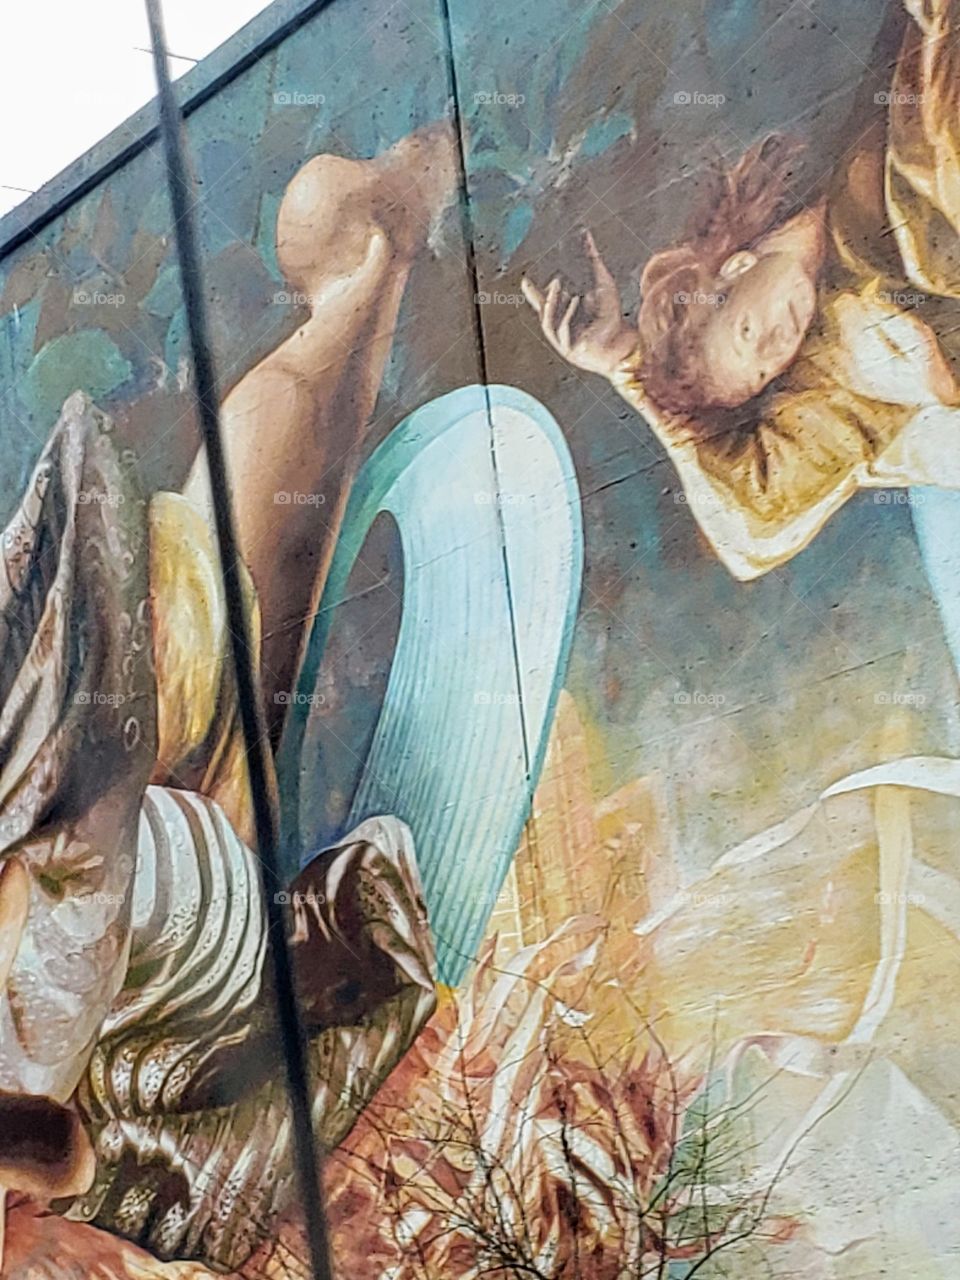 Beautiful Painting on City Wall